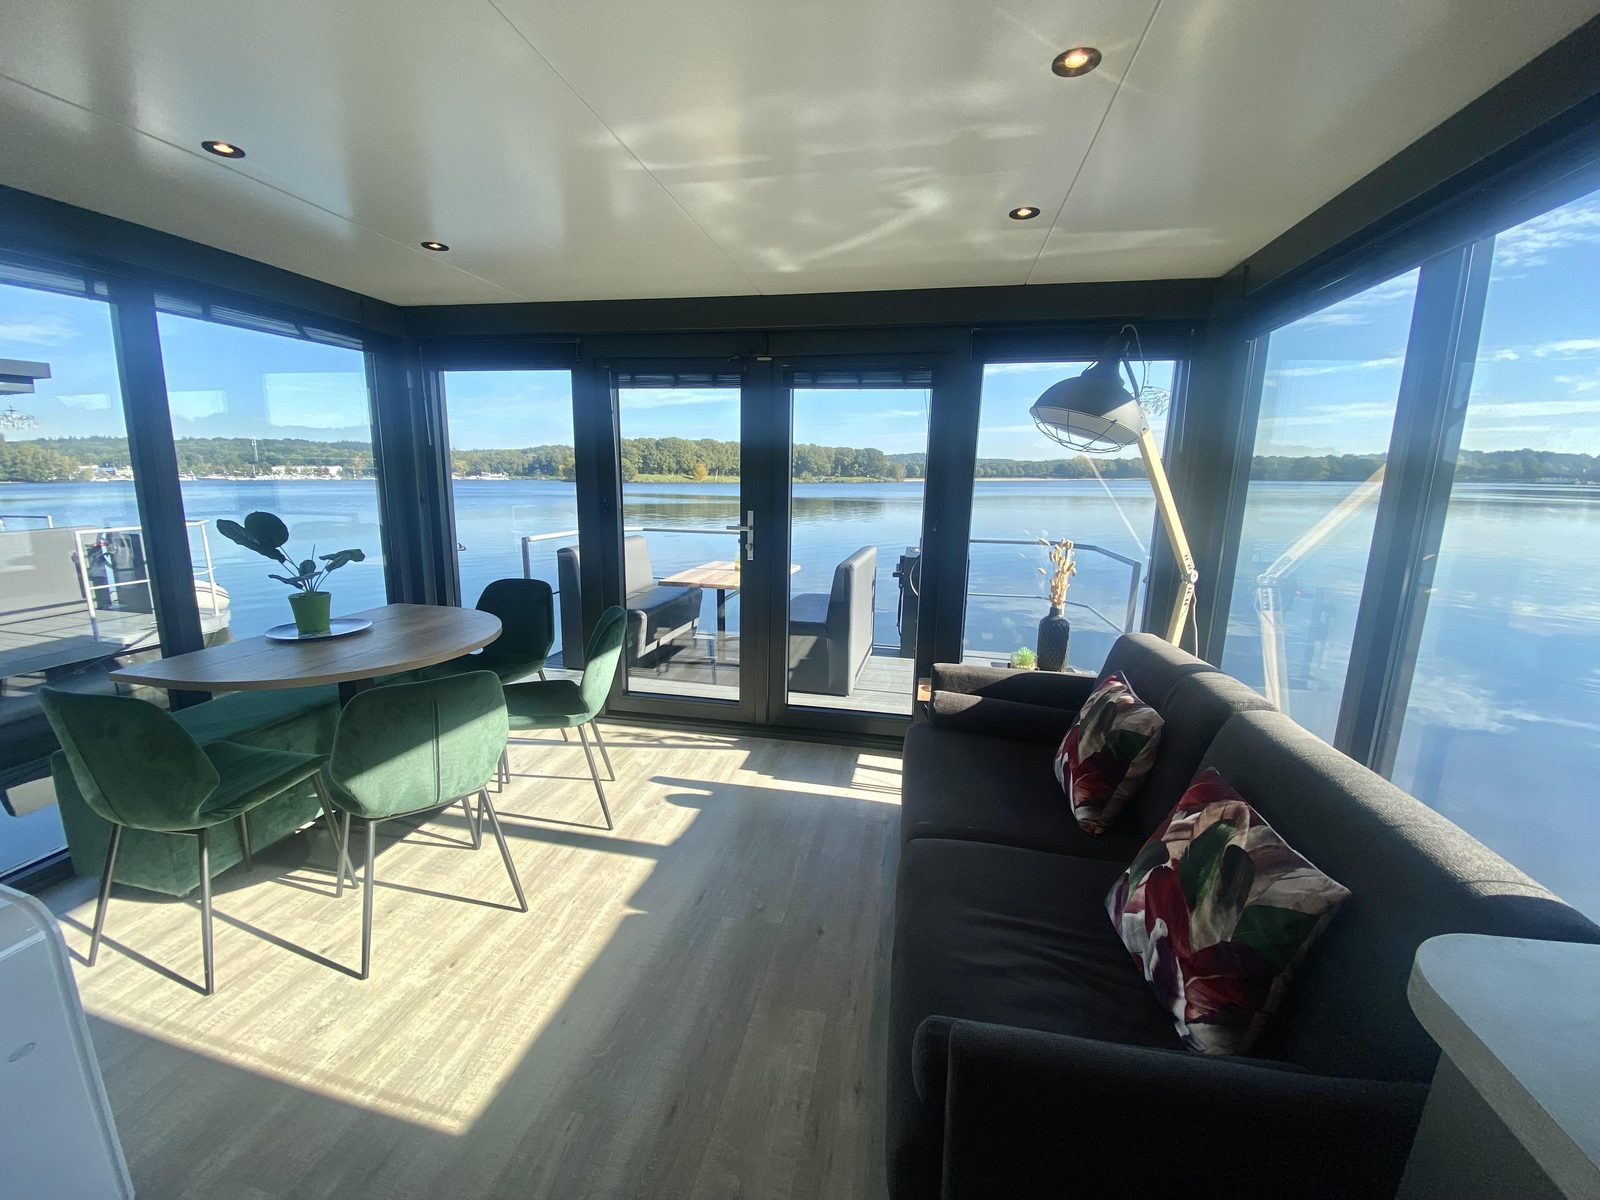  View Houseboat Marina Mookerplas